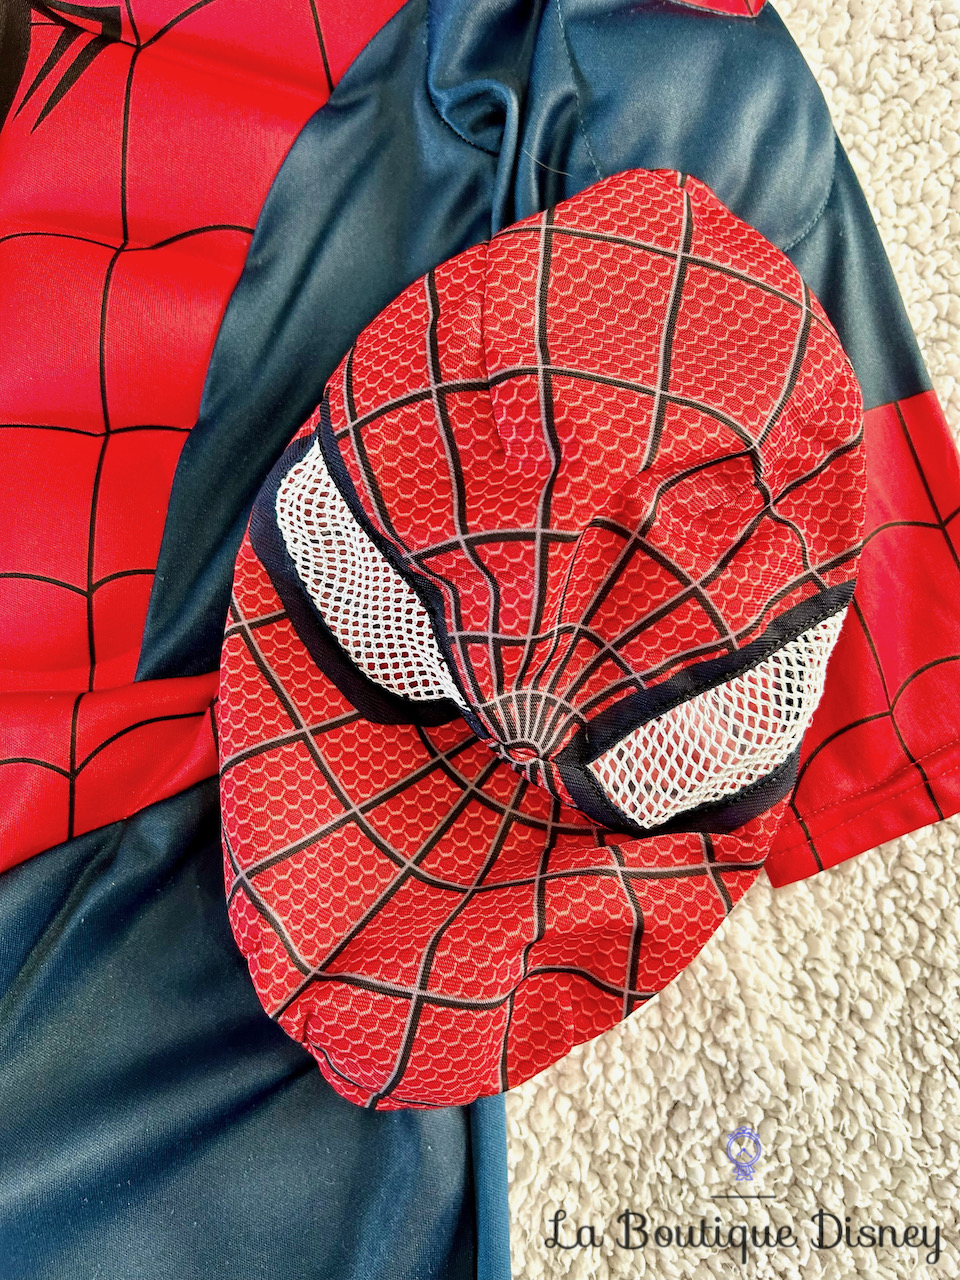 déguisement-spiderman-disney-ultimate-spider-man-rubies-combinaison-bleu-rouge-masque-3:4-4